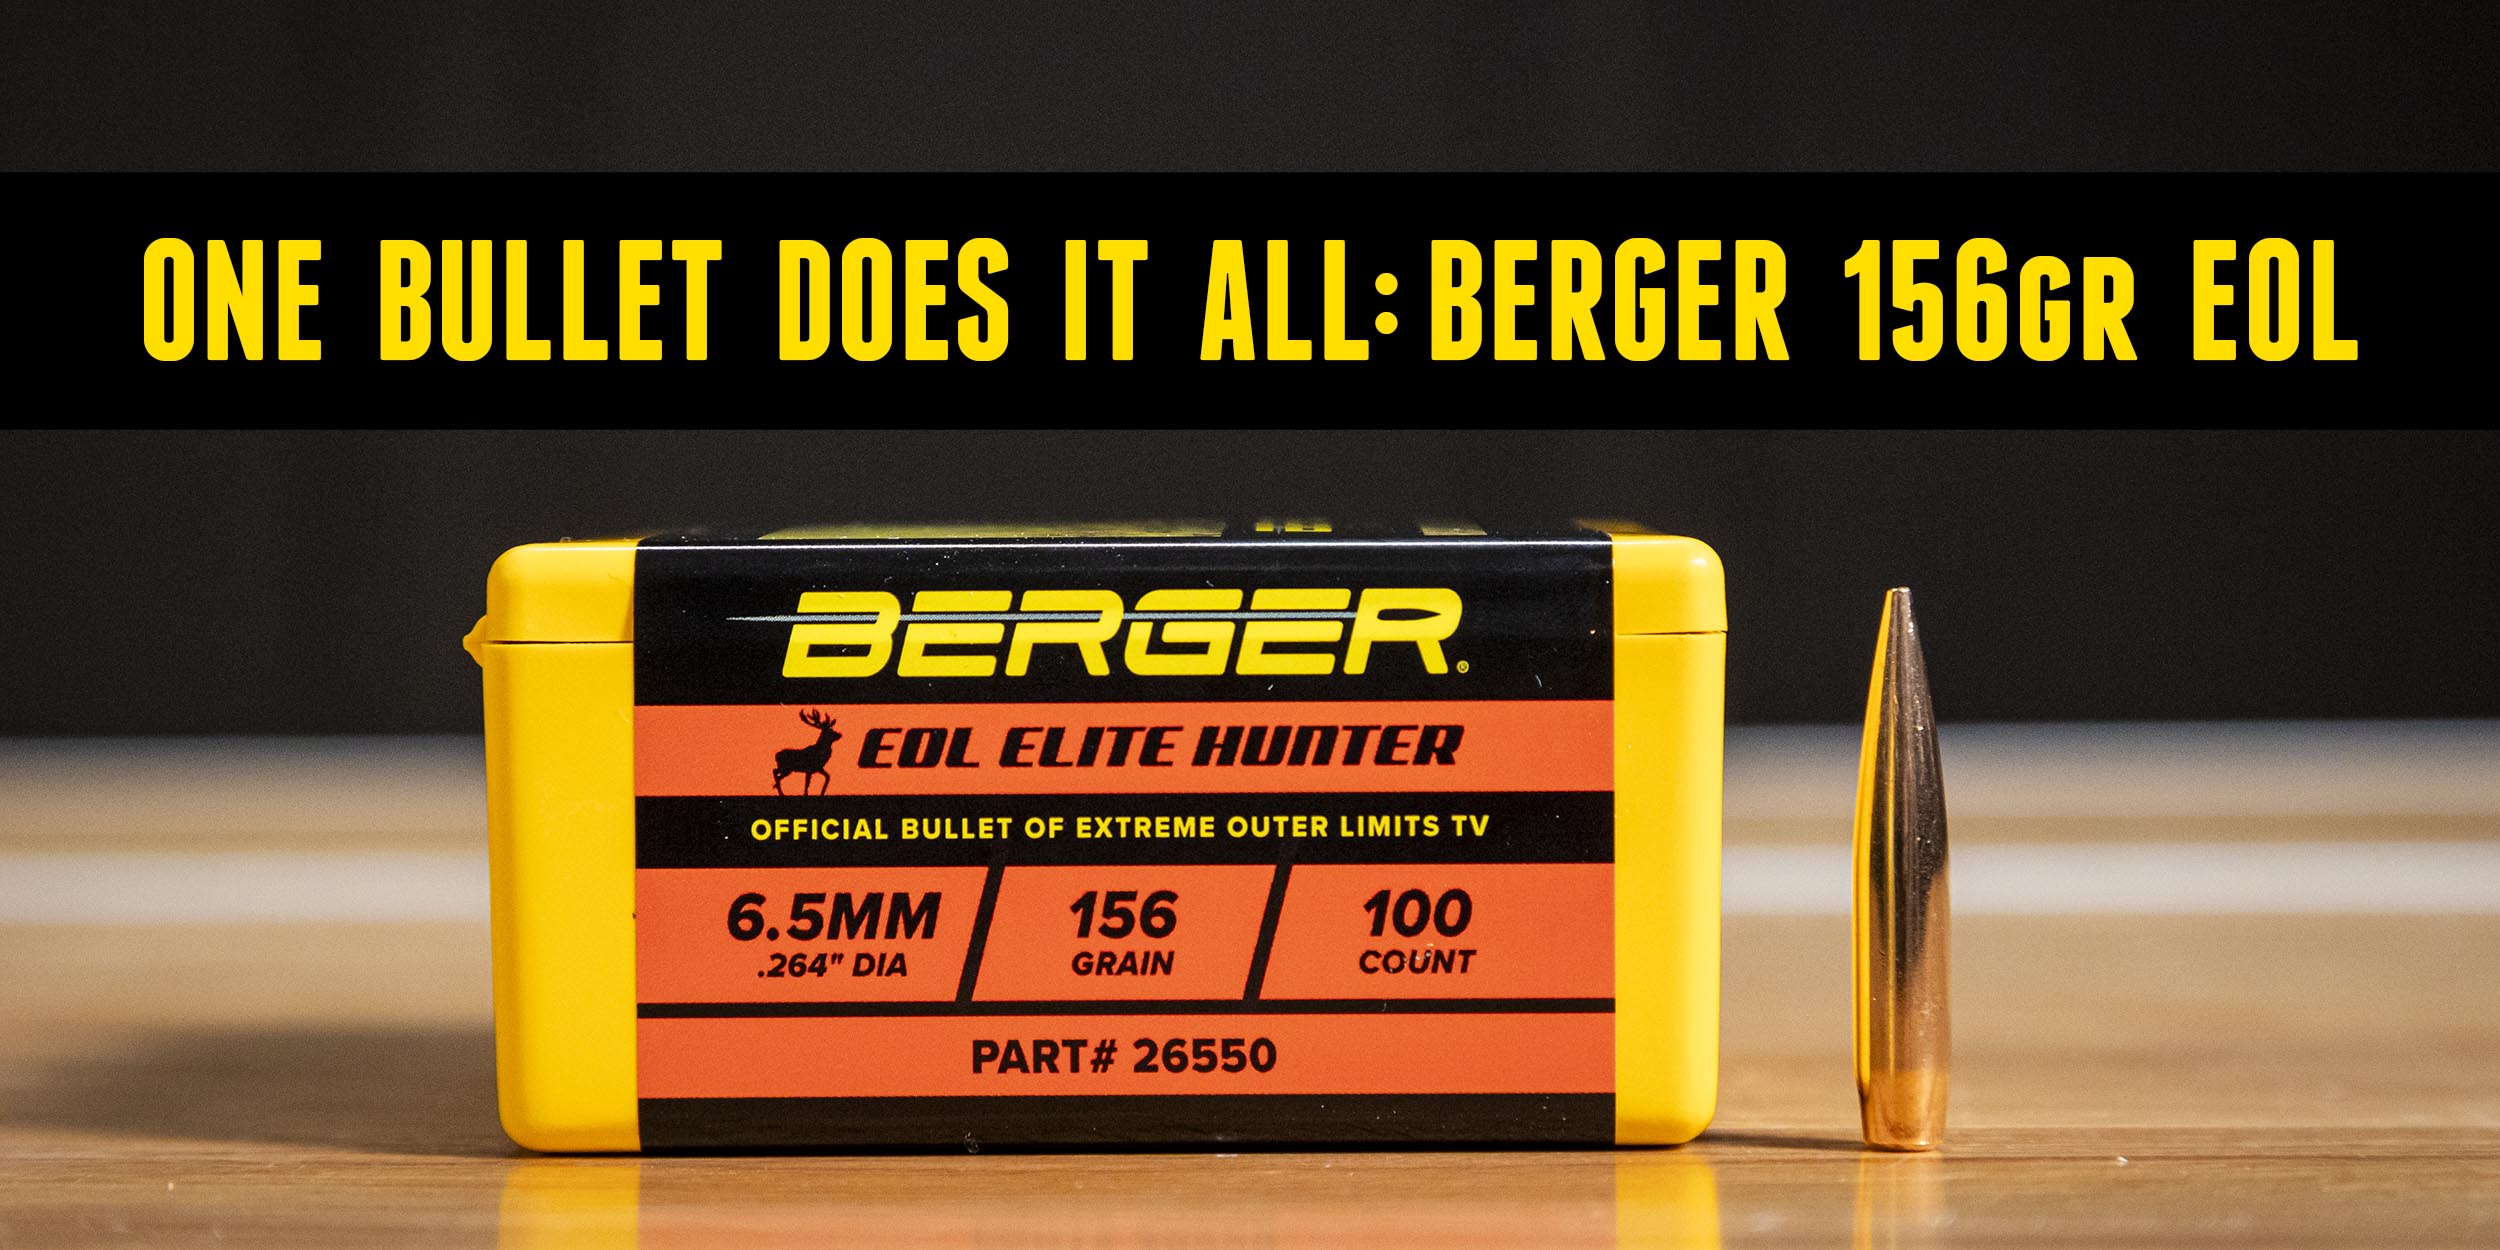 One Bullet Does it All: Berger 156 Grain 6.5mm EOL – Ultimate Reloader